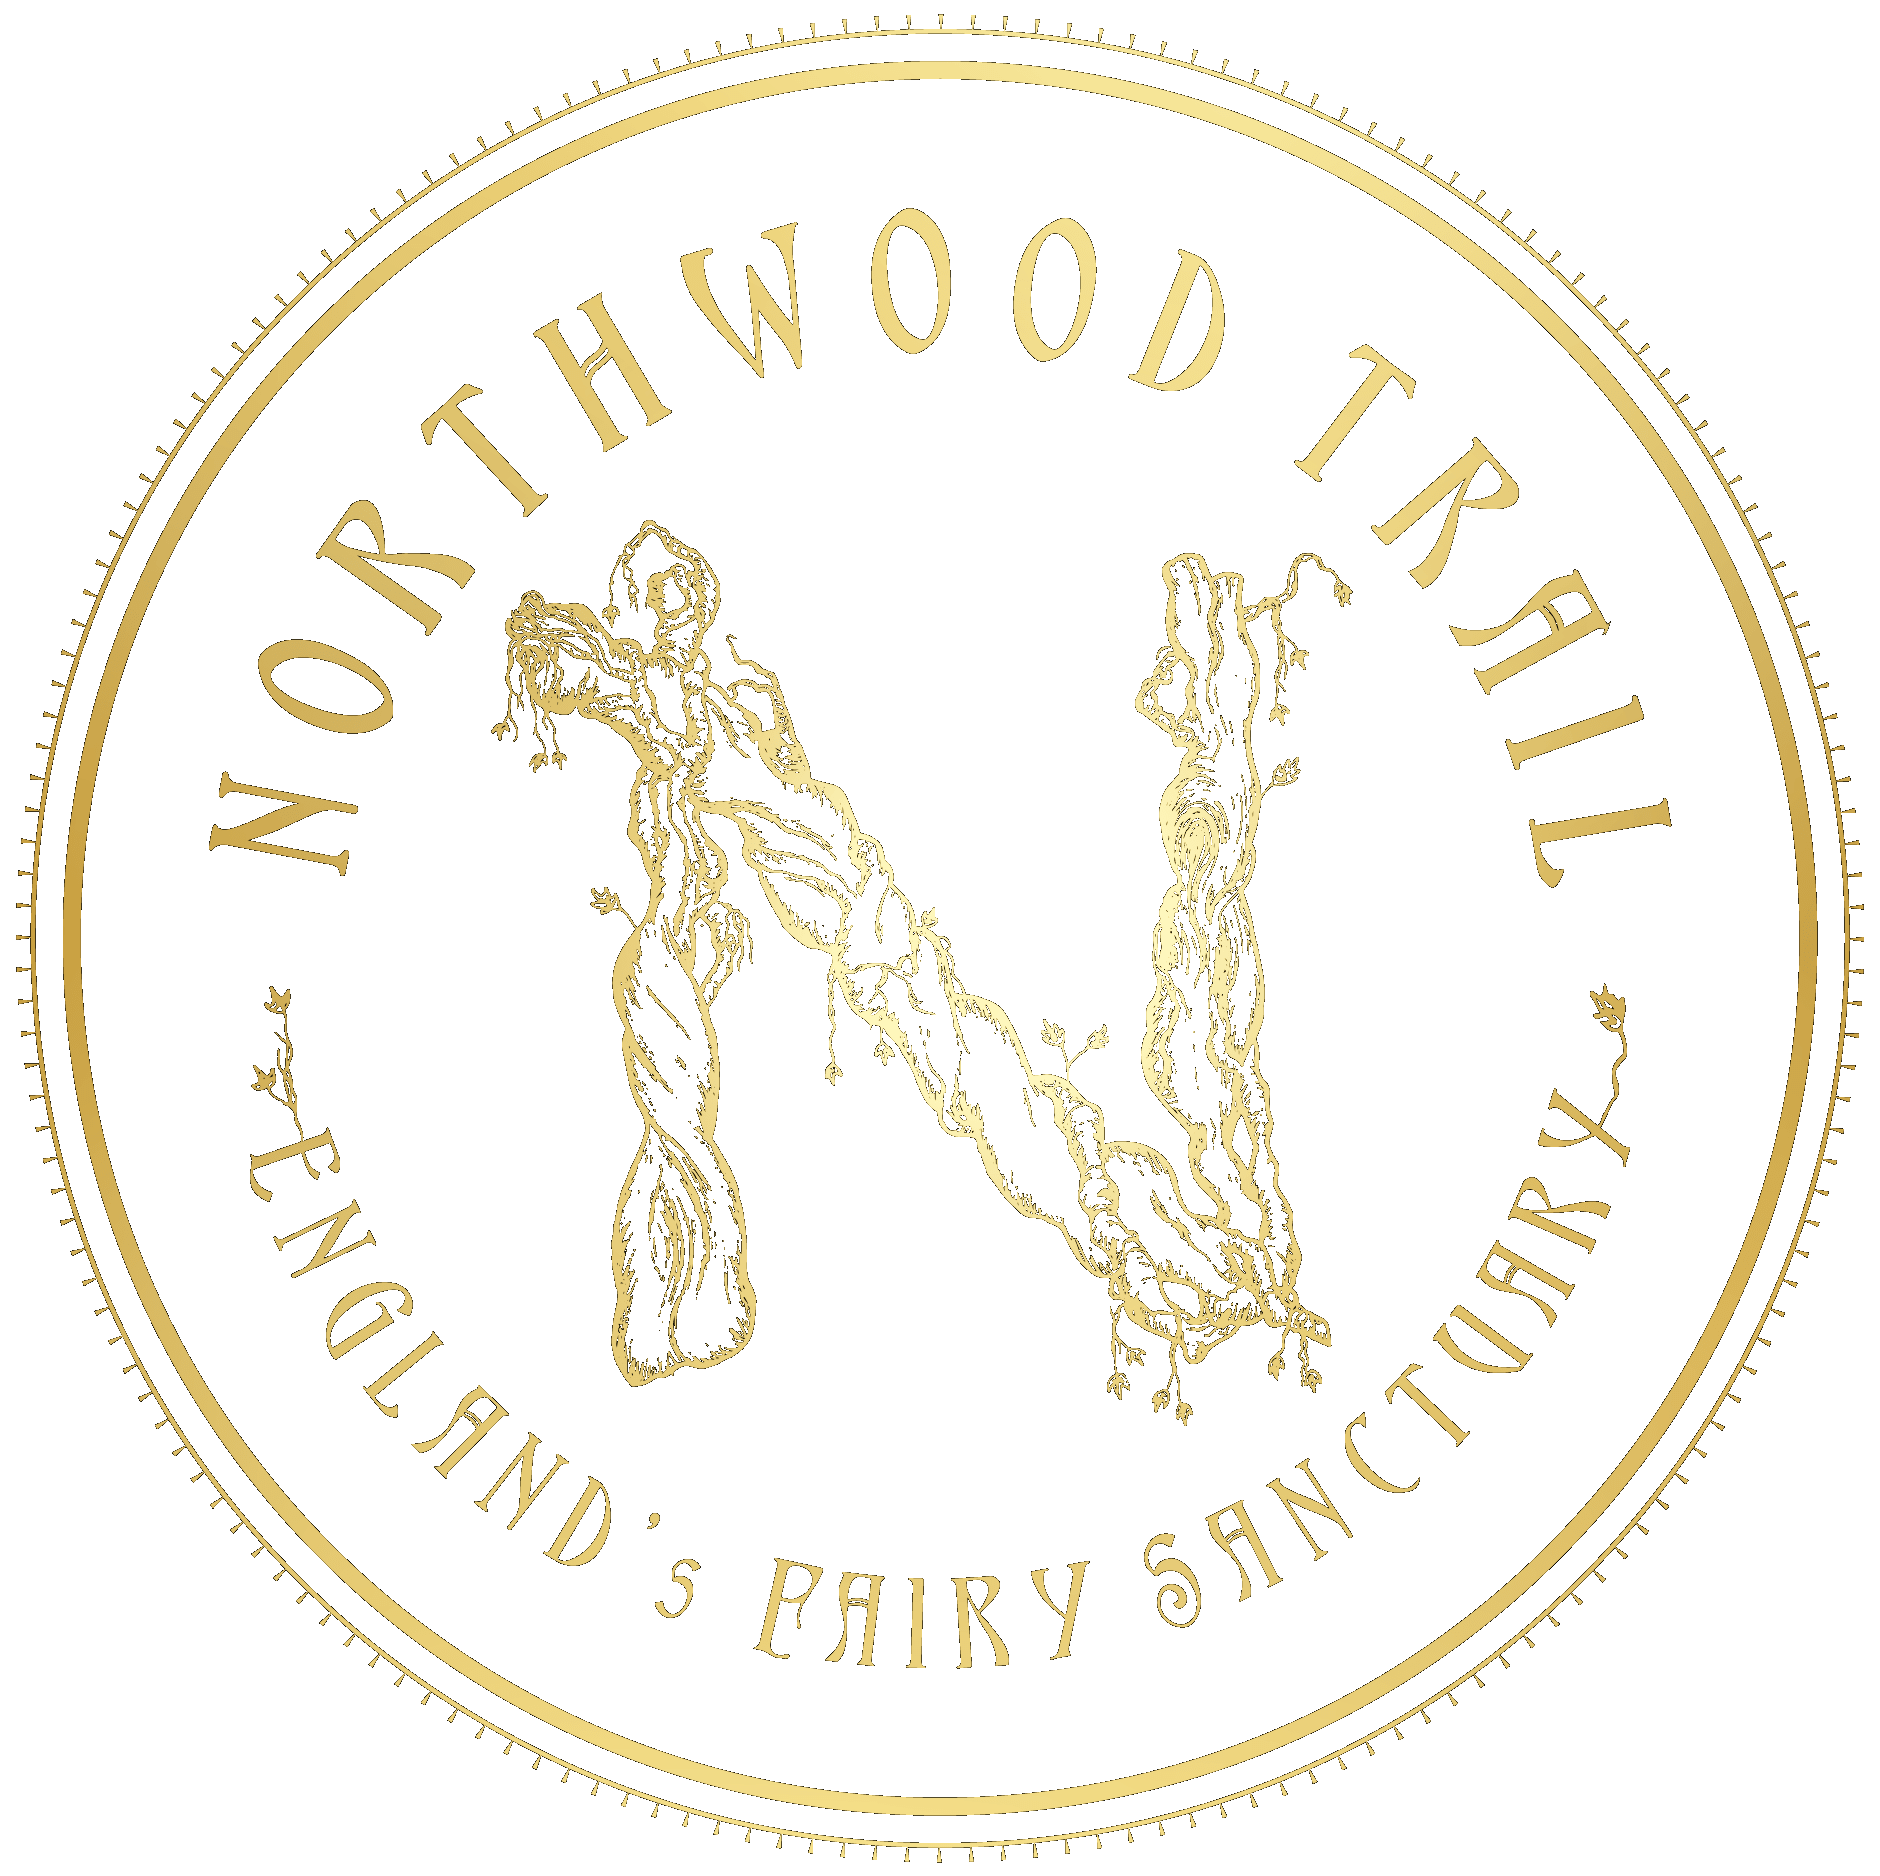 Prices, Fairy wood near York, Northwood trail